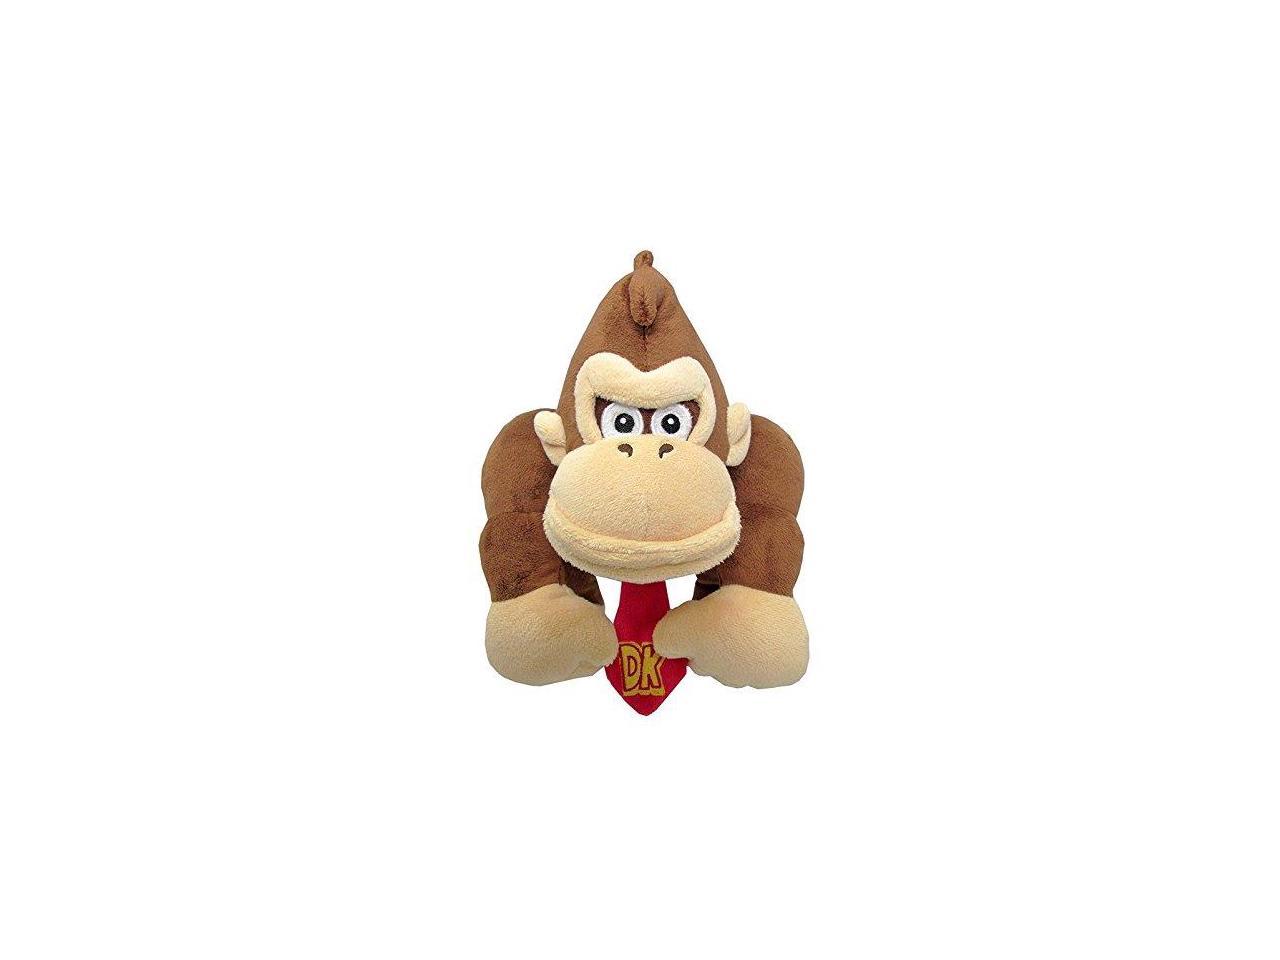 REAL Little Buddy Super Mario 1586 All Star Donkey Kong 8" Plush 